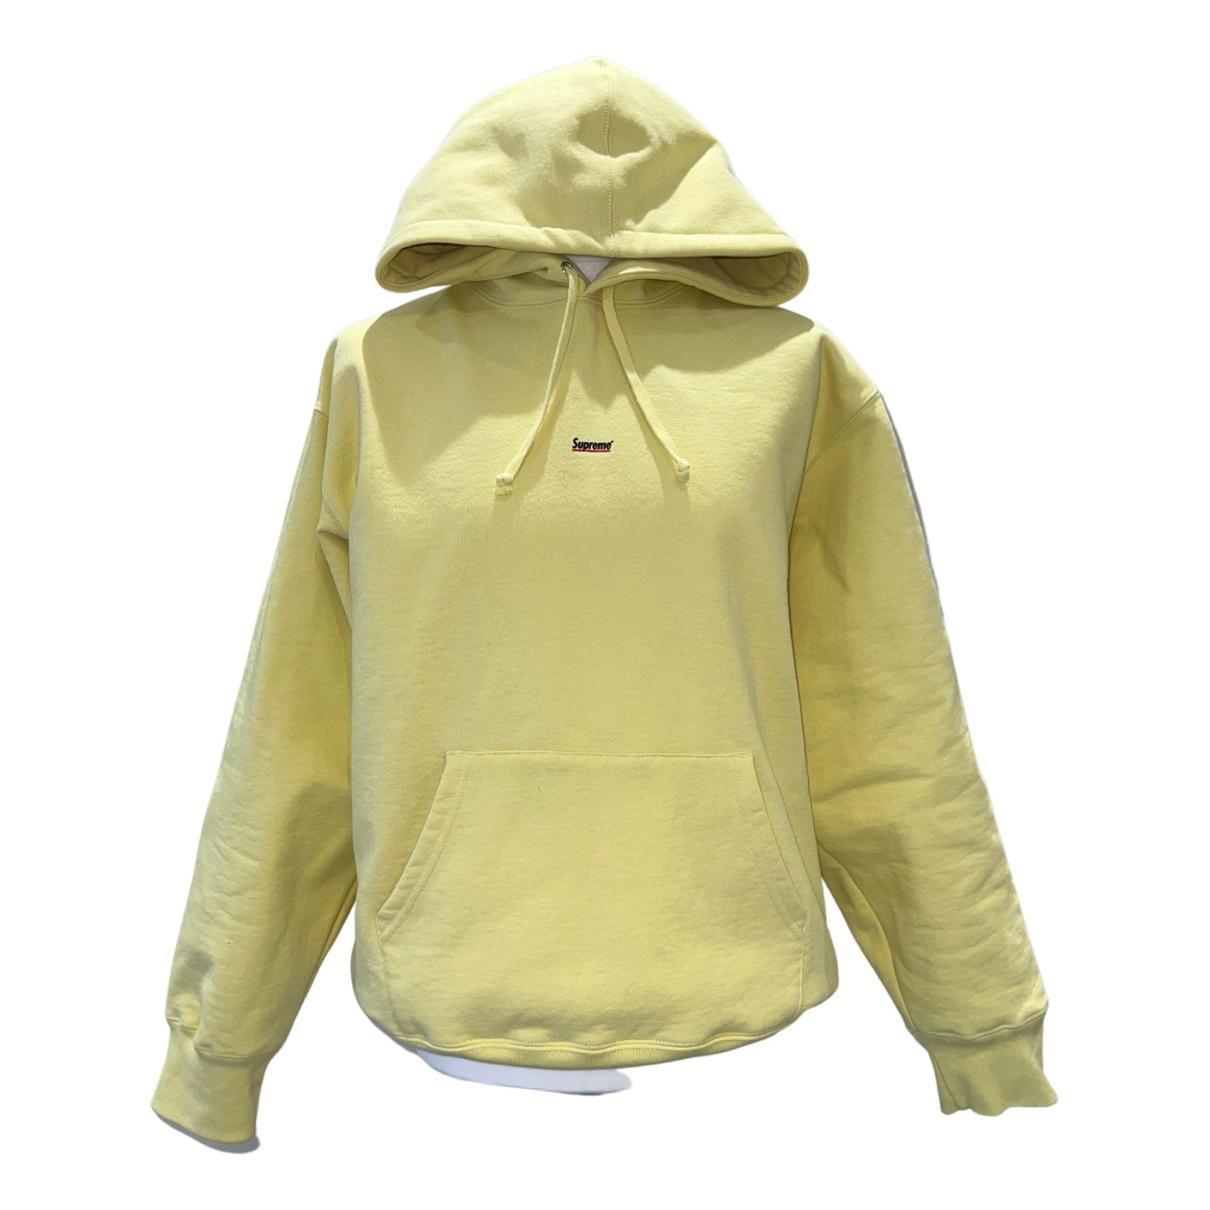 Sweatshirt Supreme Yellow size L International in Cotton - 30748495